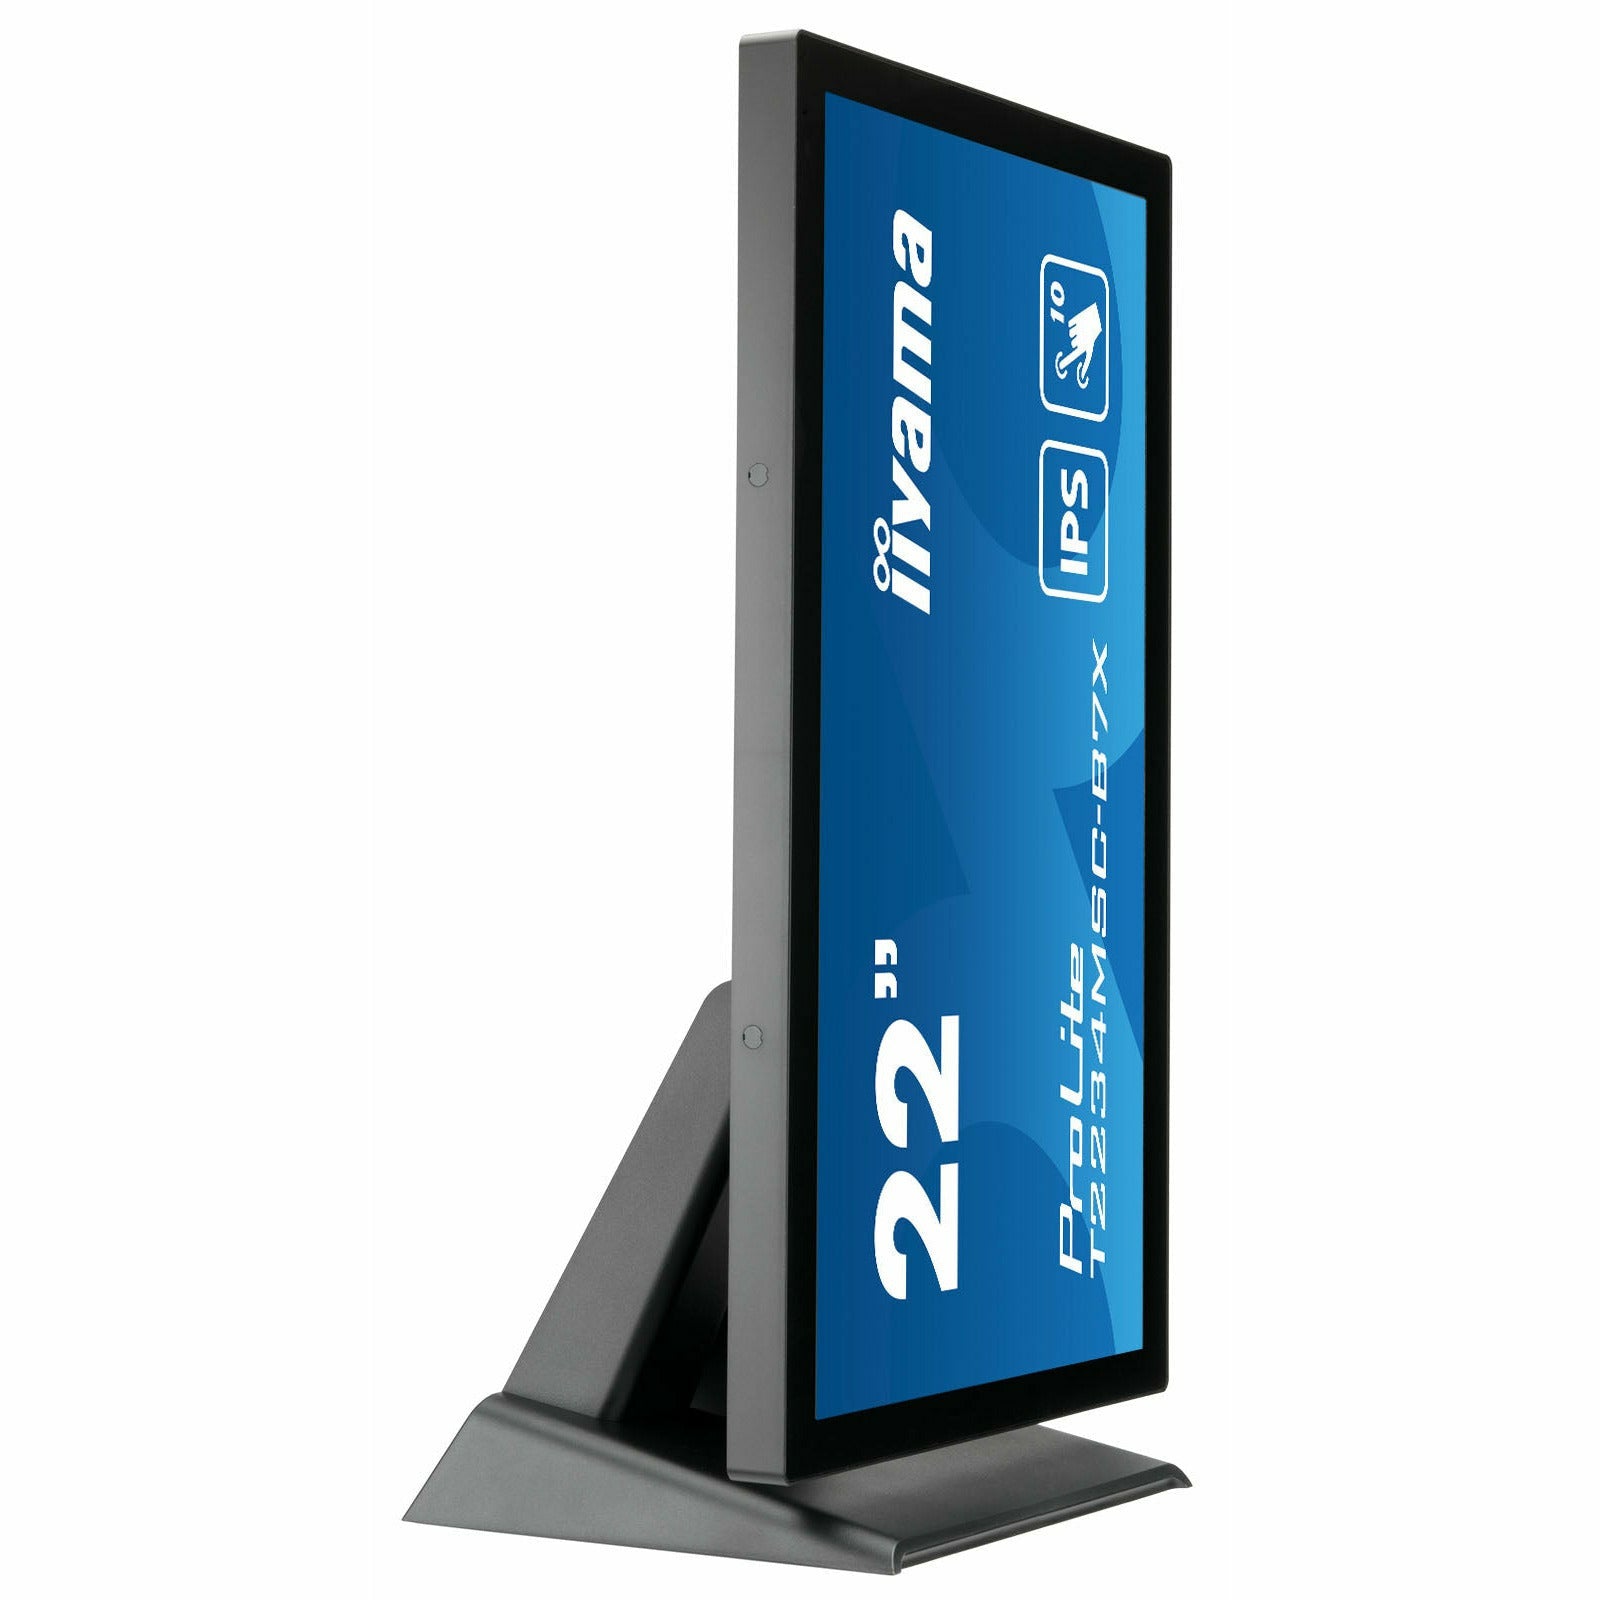 iiyama ProLite T2234MSC-B7X 22" IPS Touch Screen Display